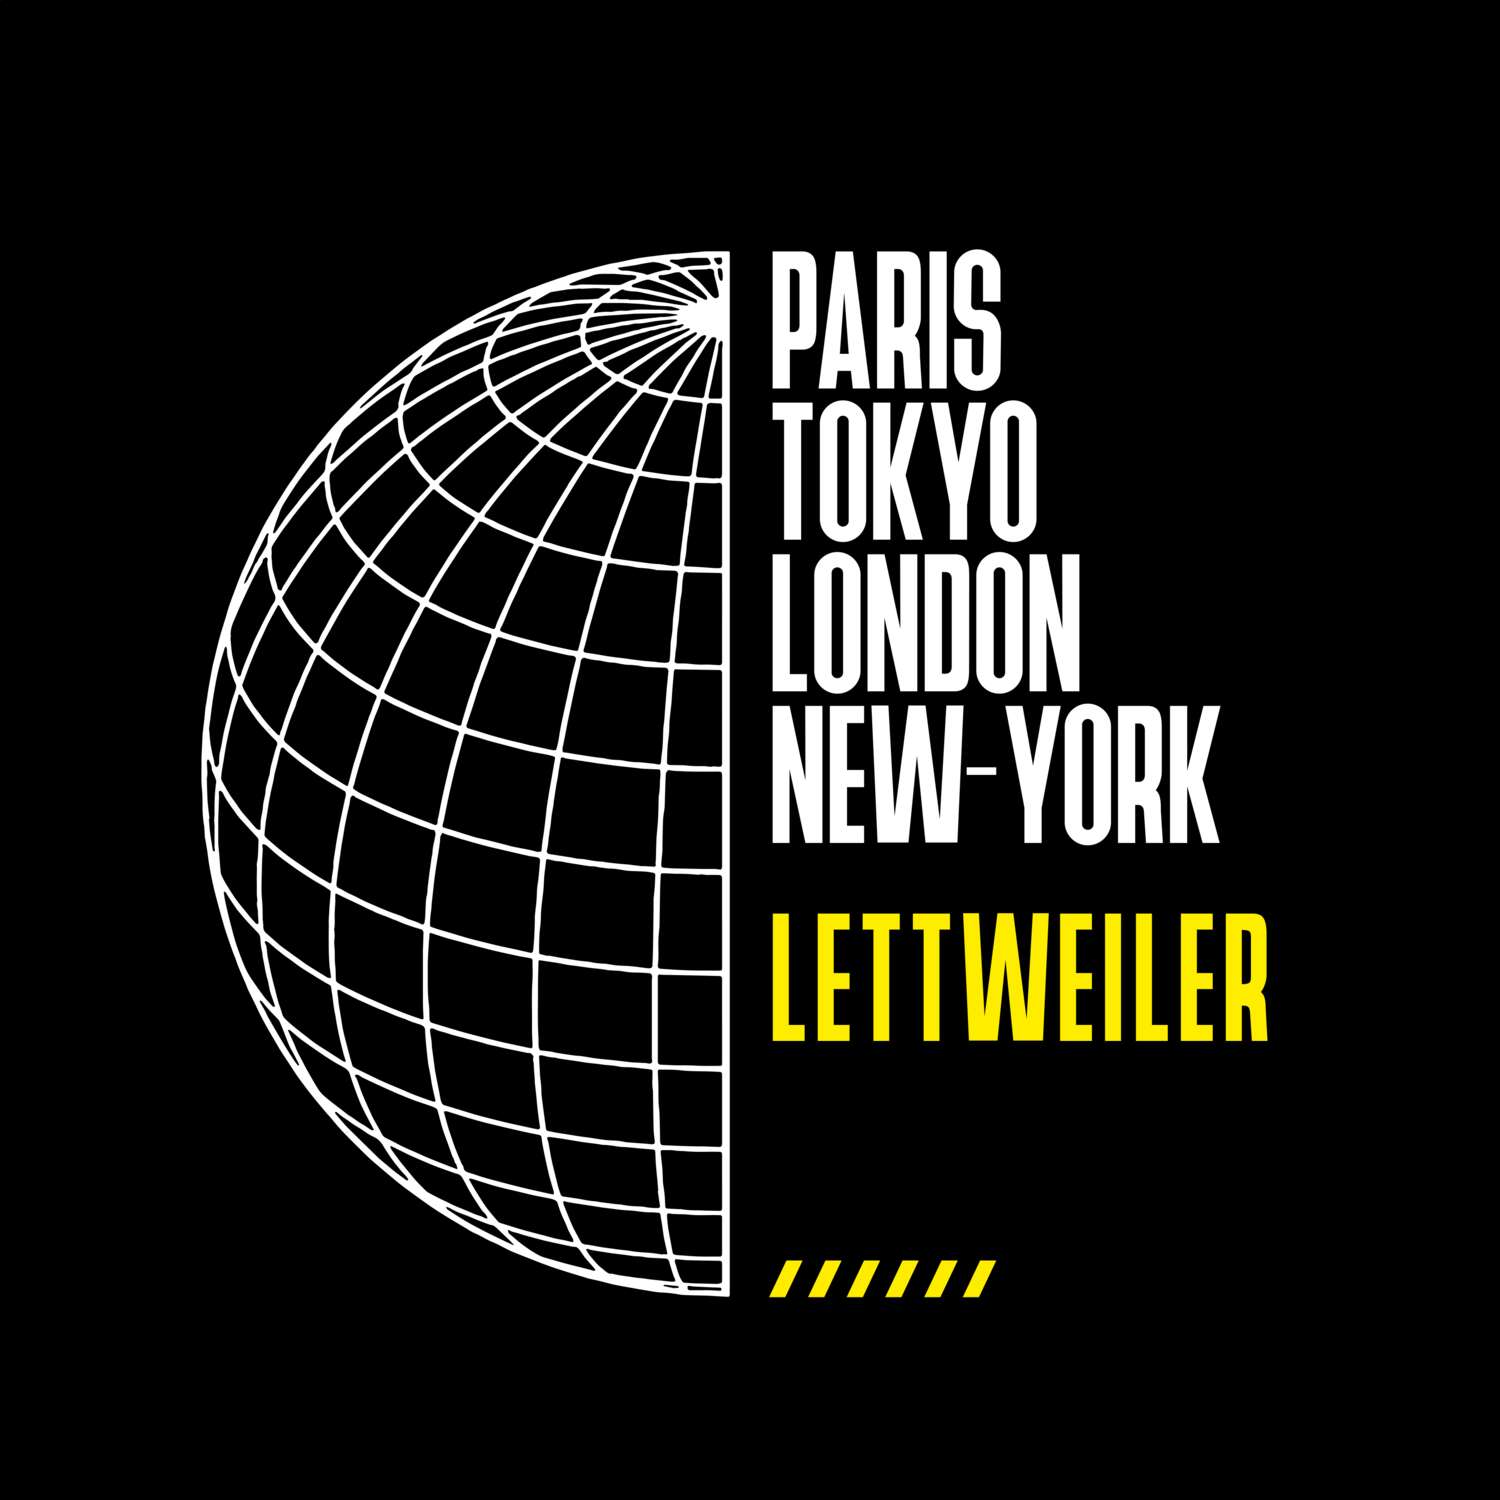 Lettweiler T-Shirt »Paris Tokyo London«